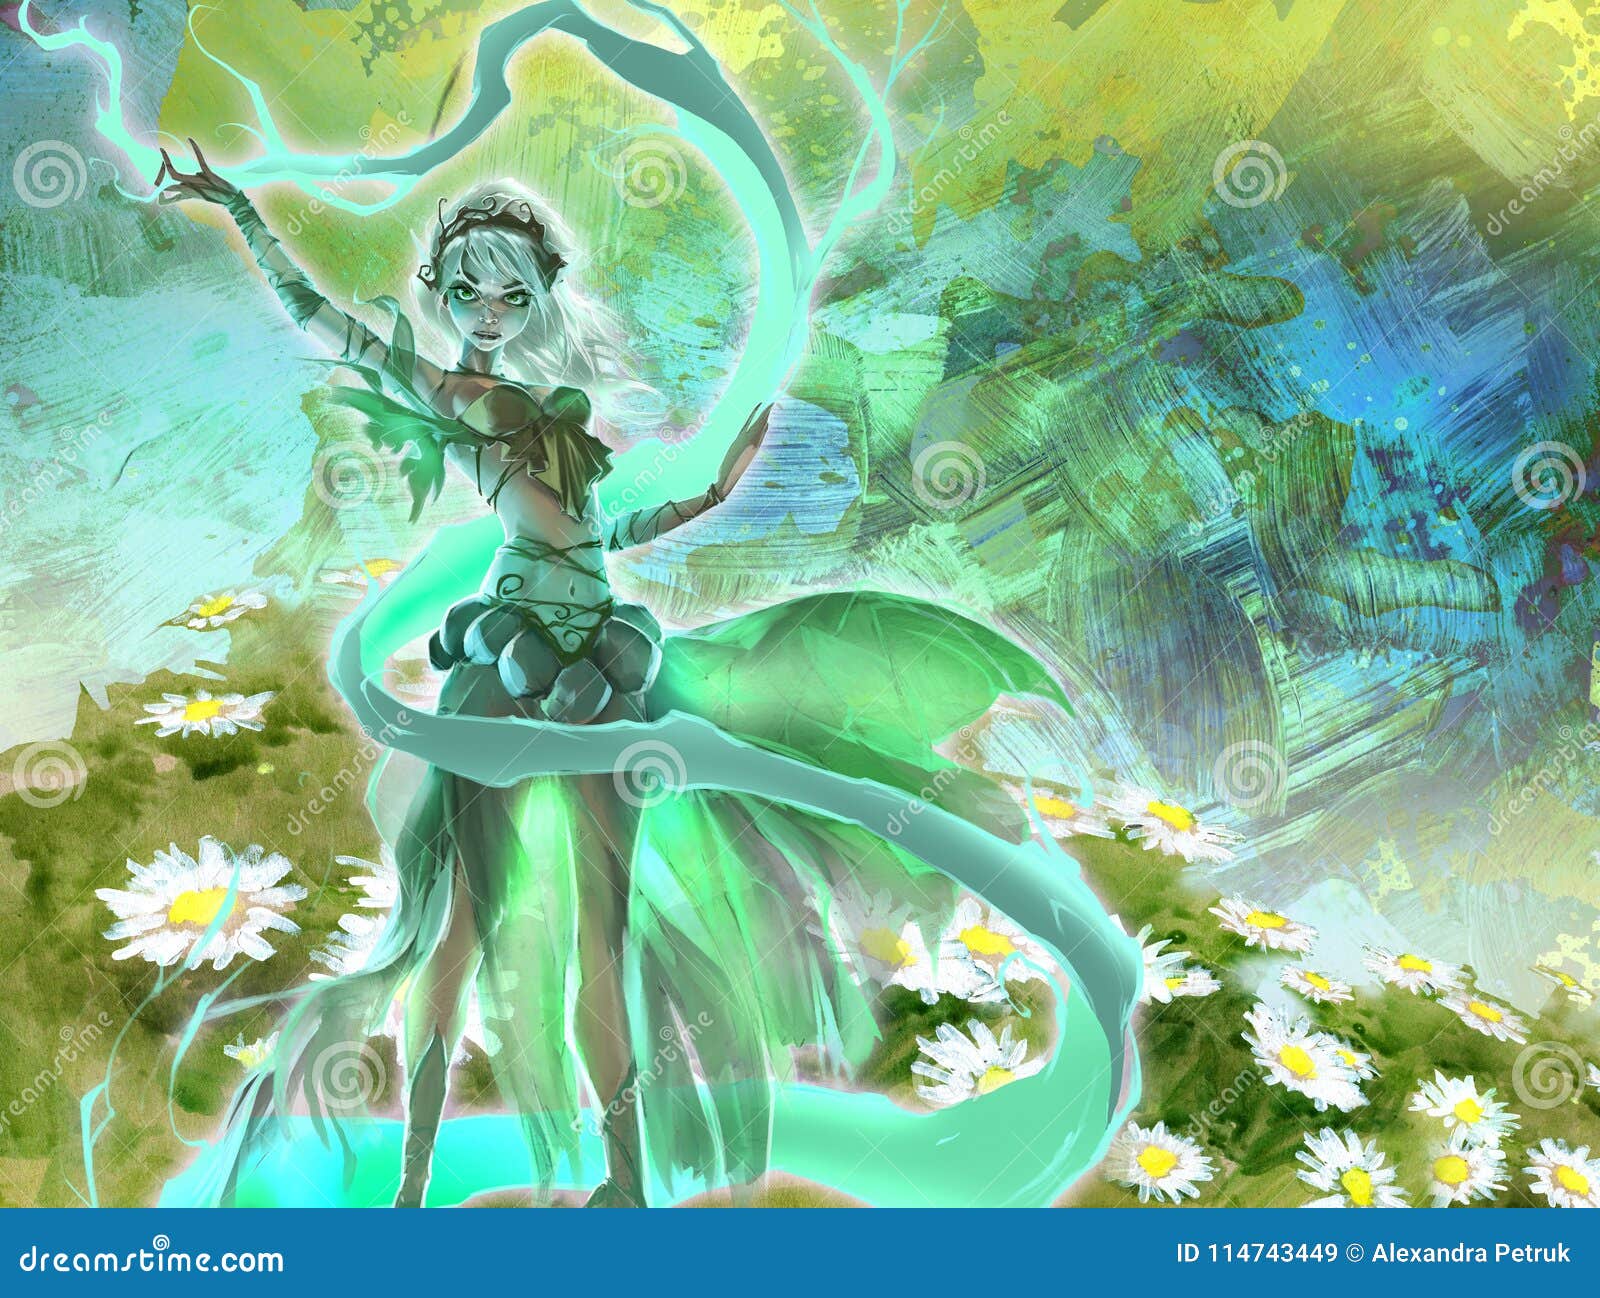 Colorful Digital Illustration an Elegant Elf Girl Perfoming Nature Magic Stock Illustration - Illustration of person, fantasy: 114743449